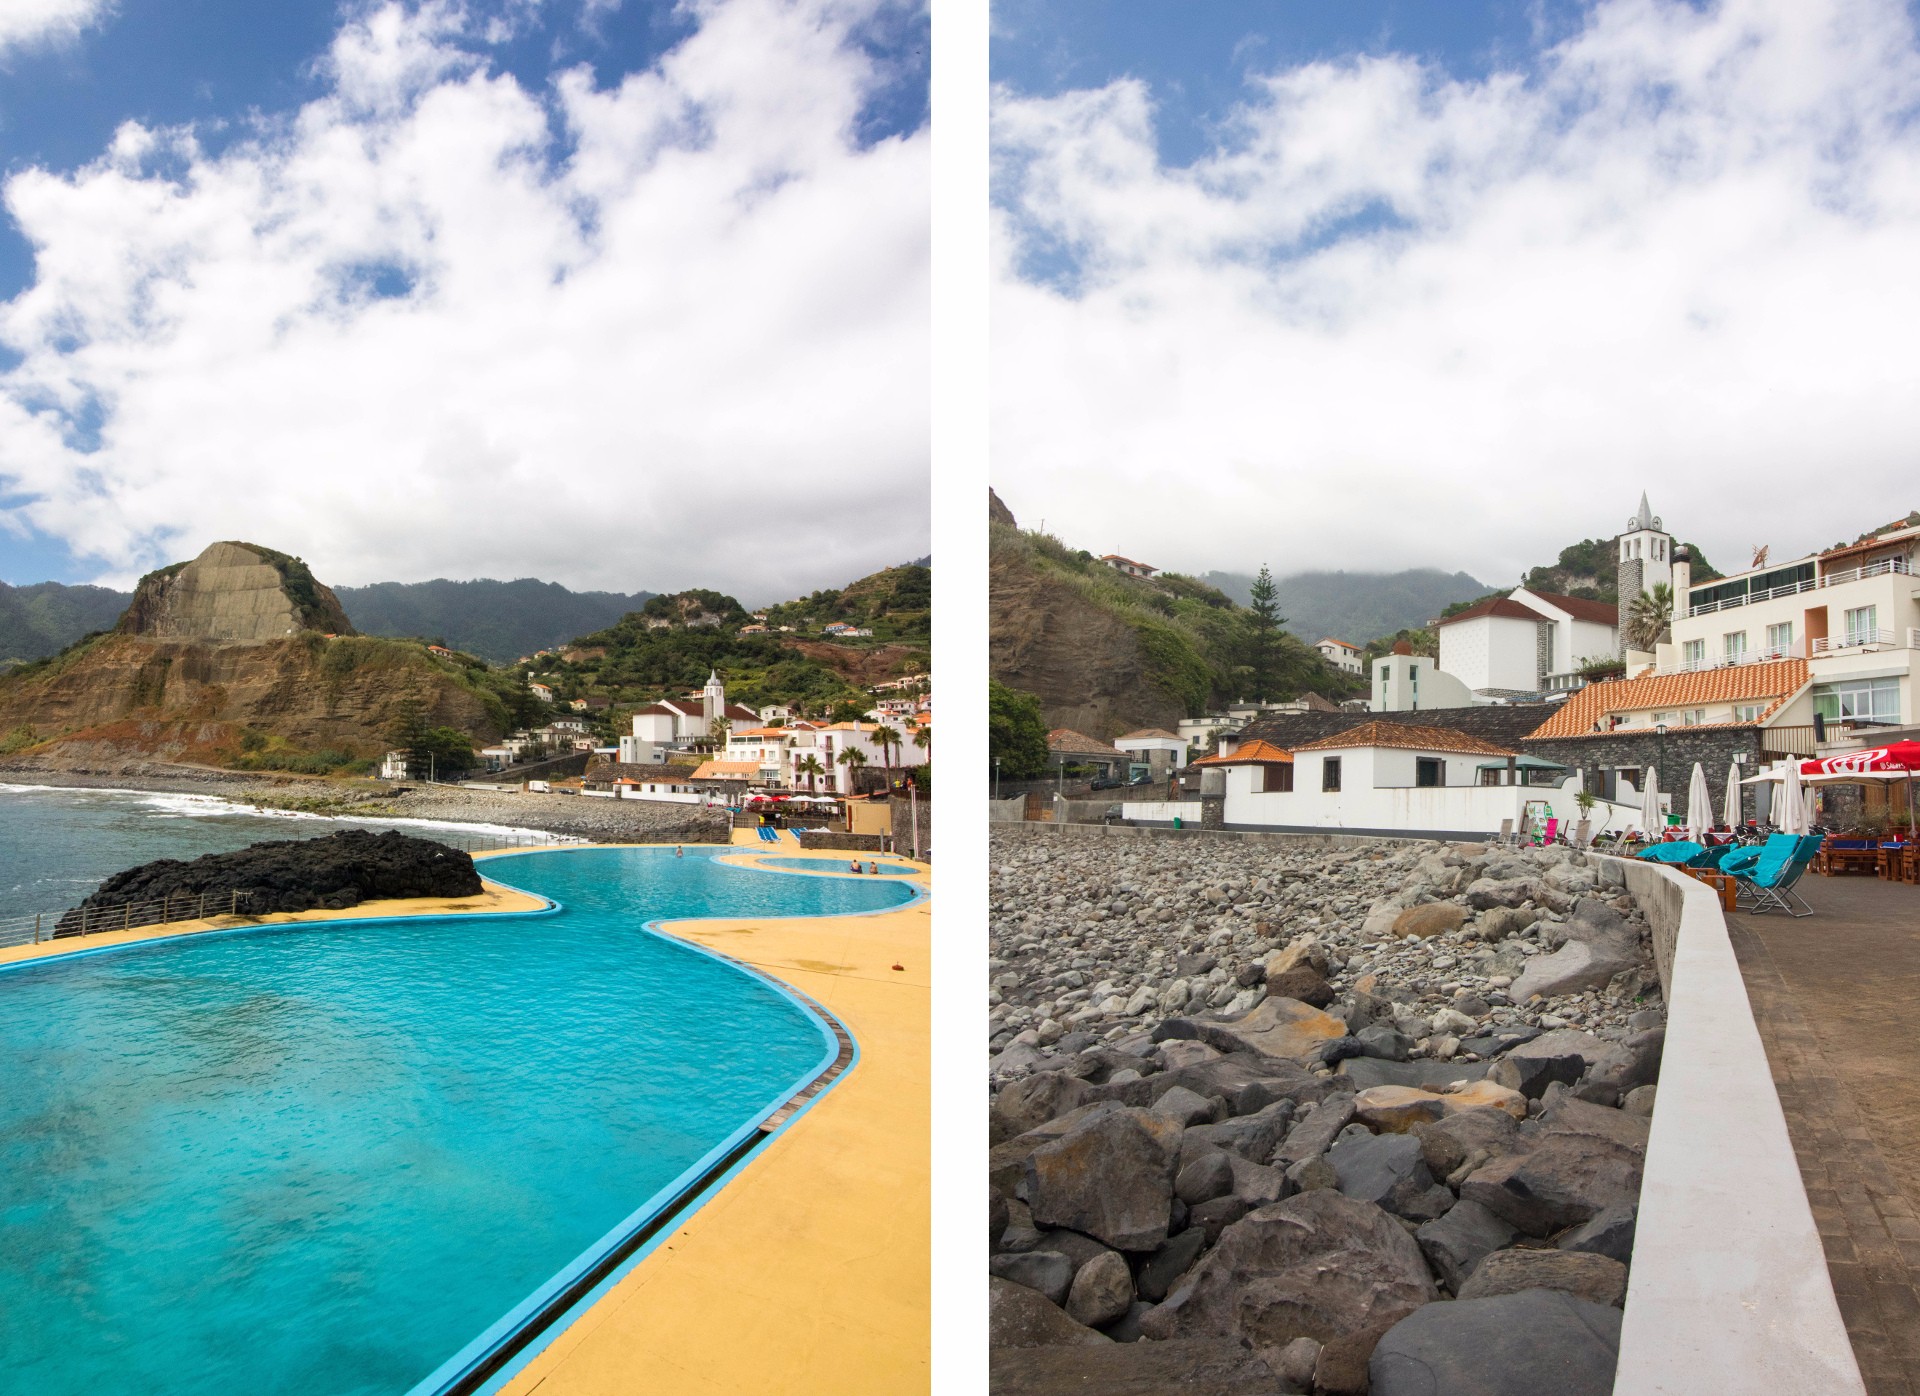 coastal-town-of-porto-da-cruz-with-swimming-pool-and-cafes